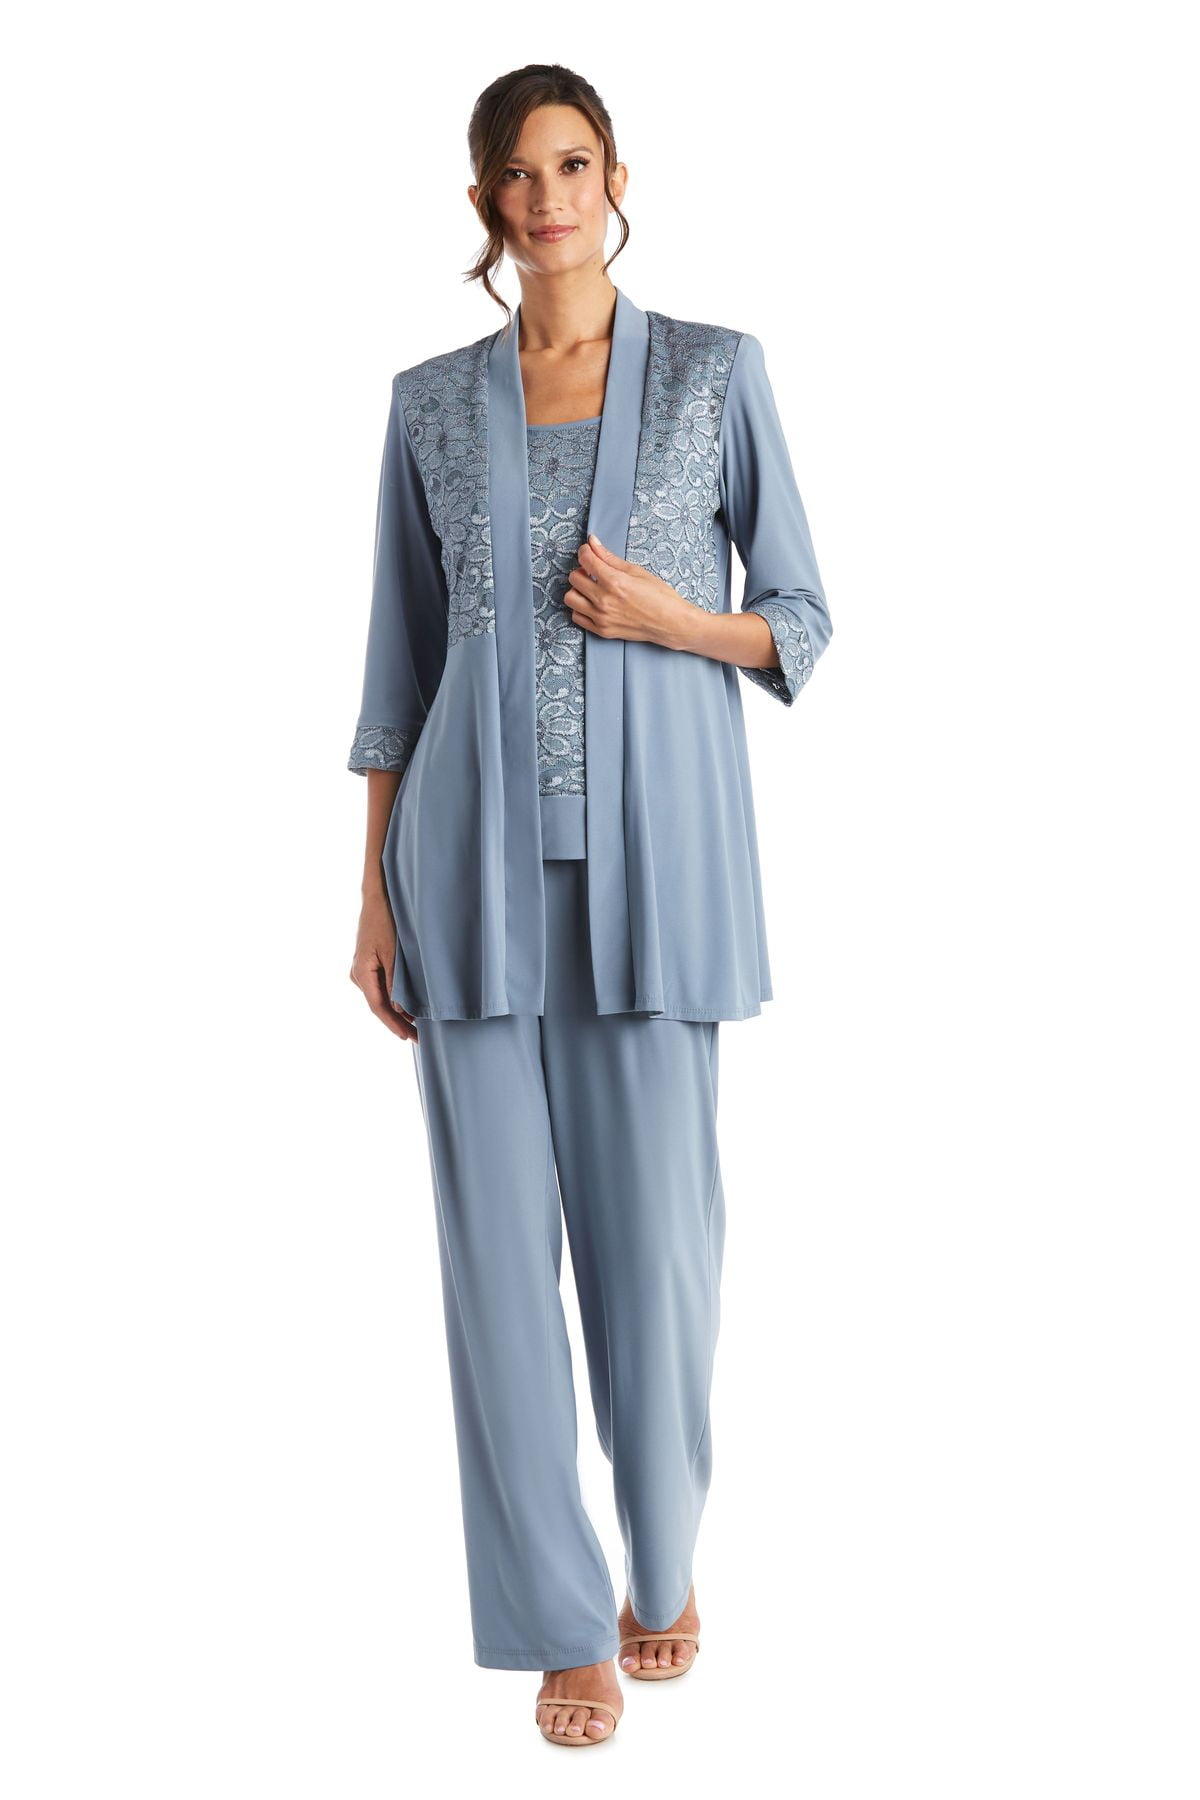 R&M Richards Women's Lace ITY 2 Piece Pant Suit - Mother of the bride ...